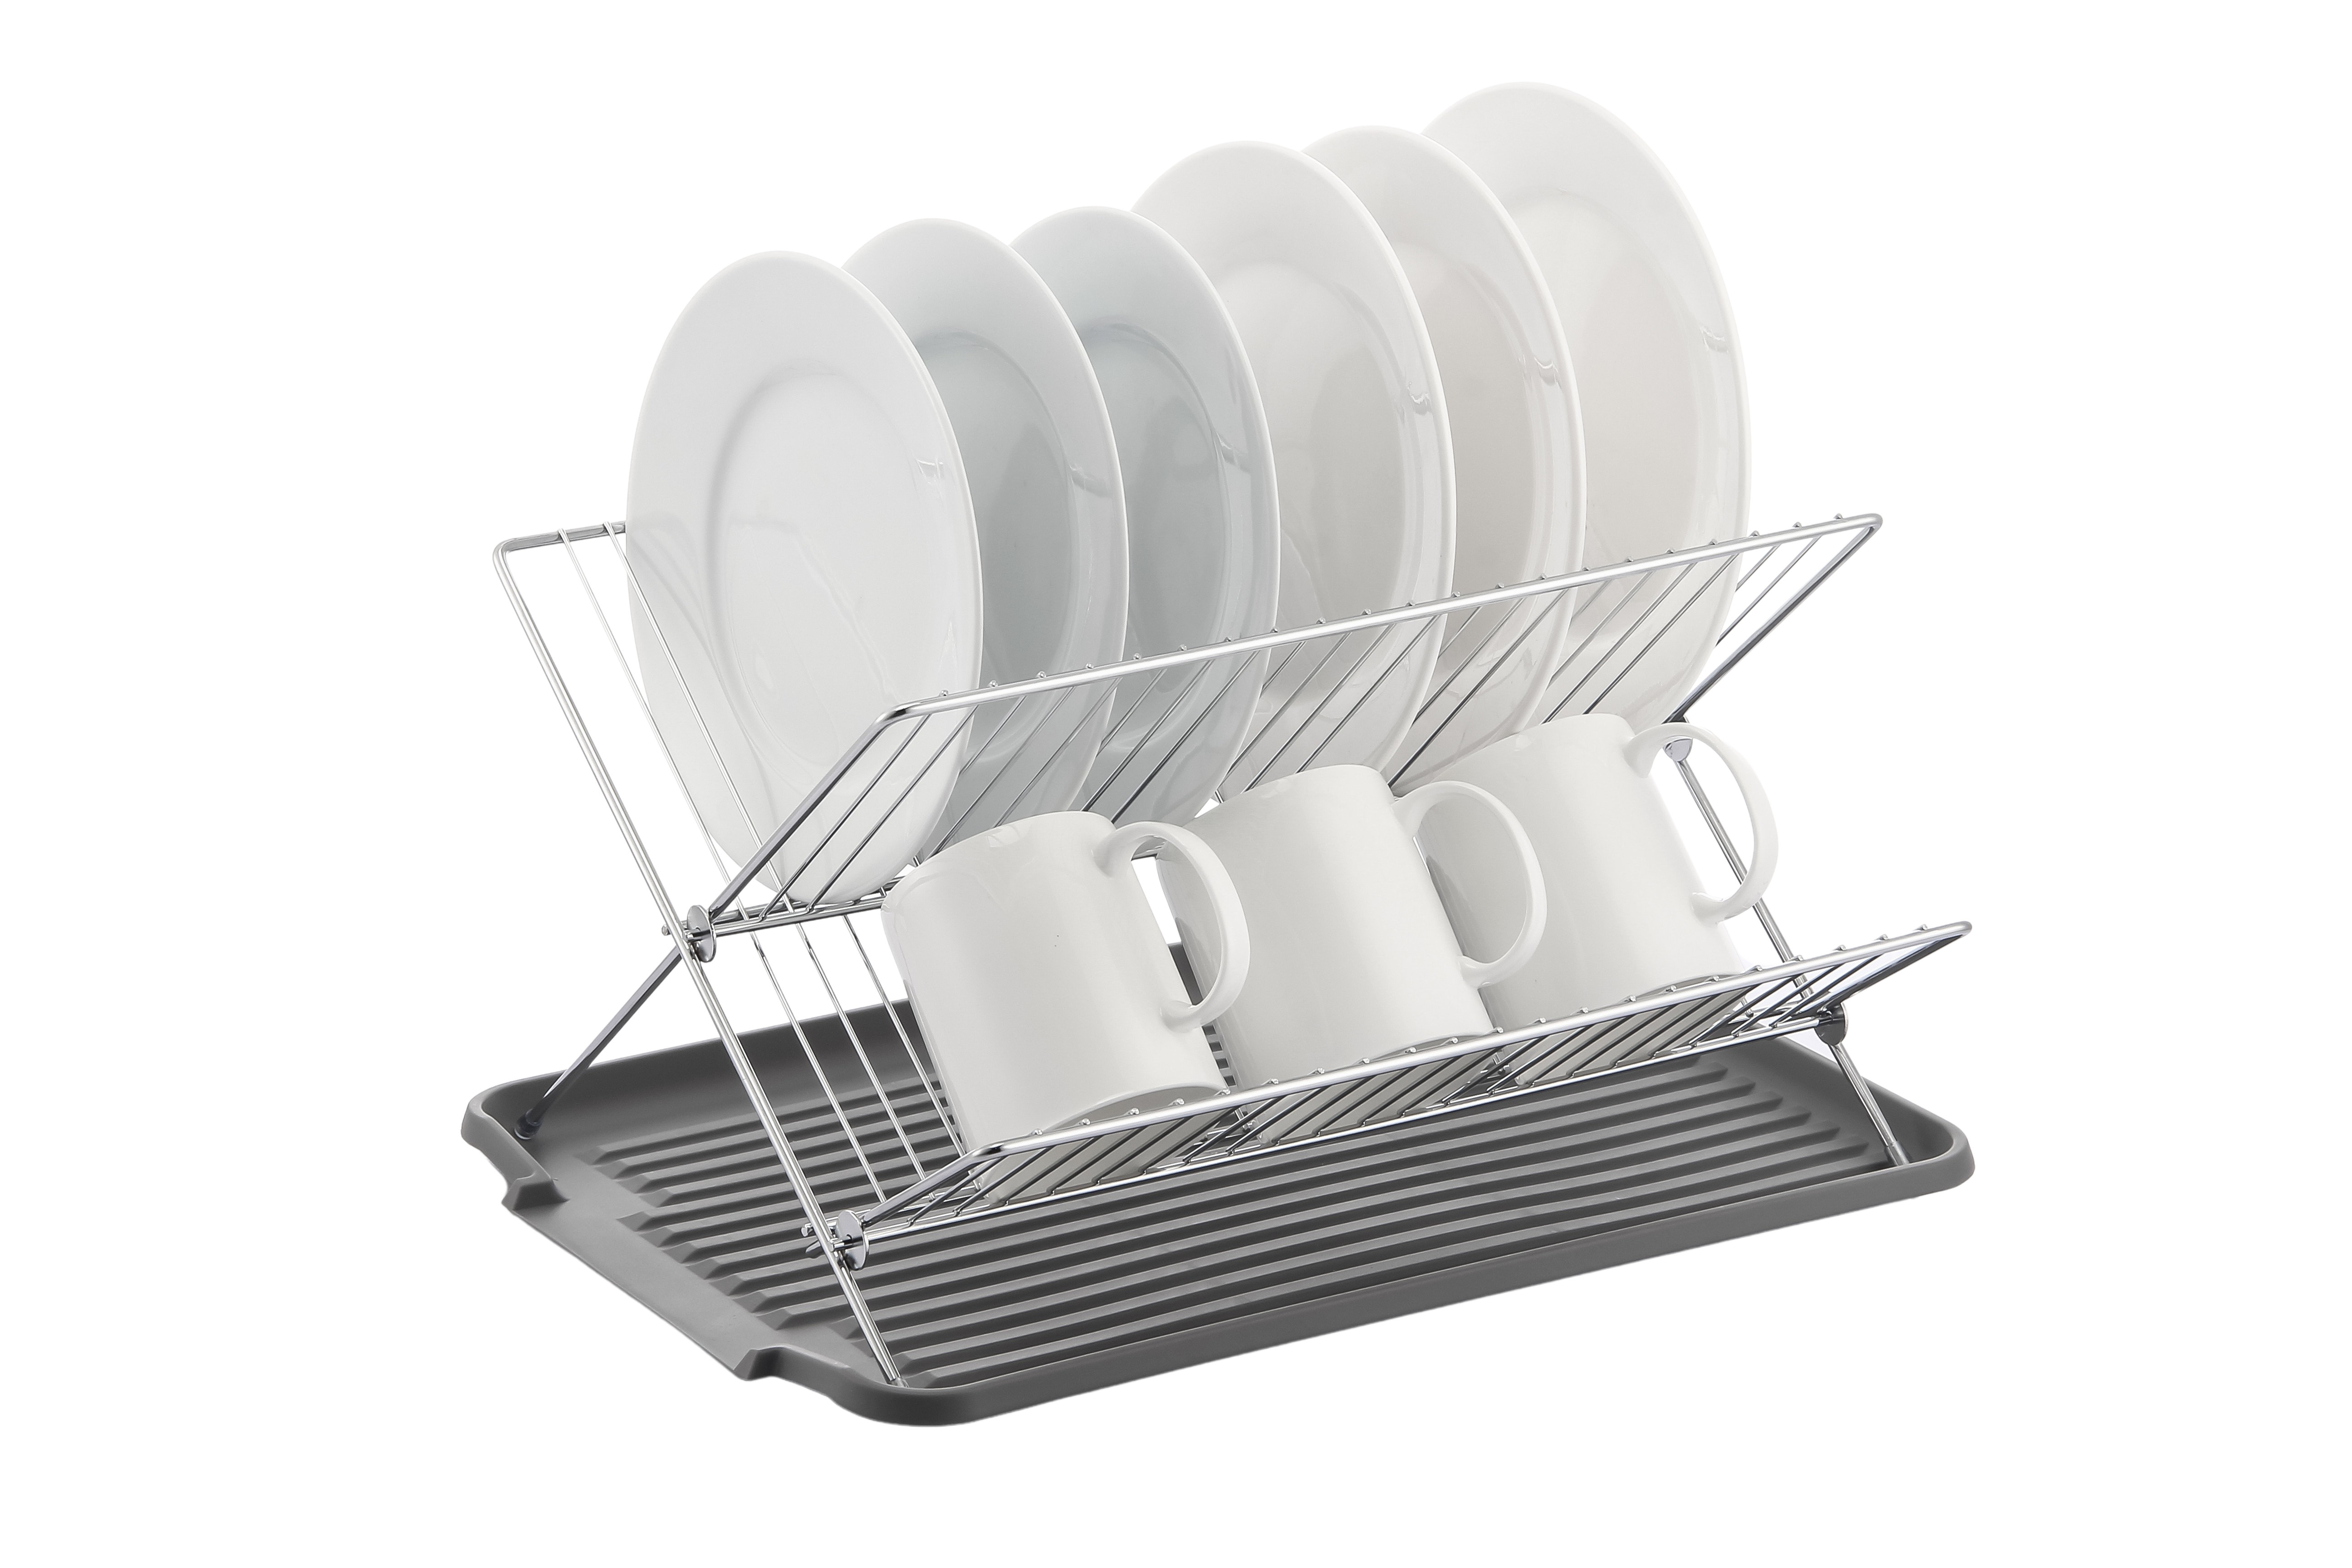 Brabantia Sinkside Large Foldable Dish Rack